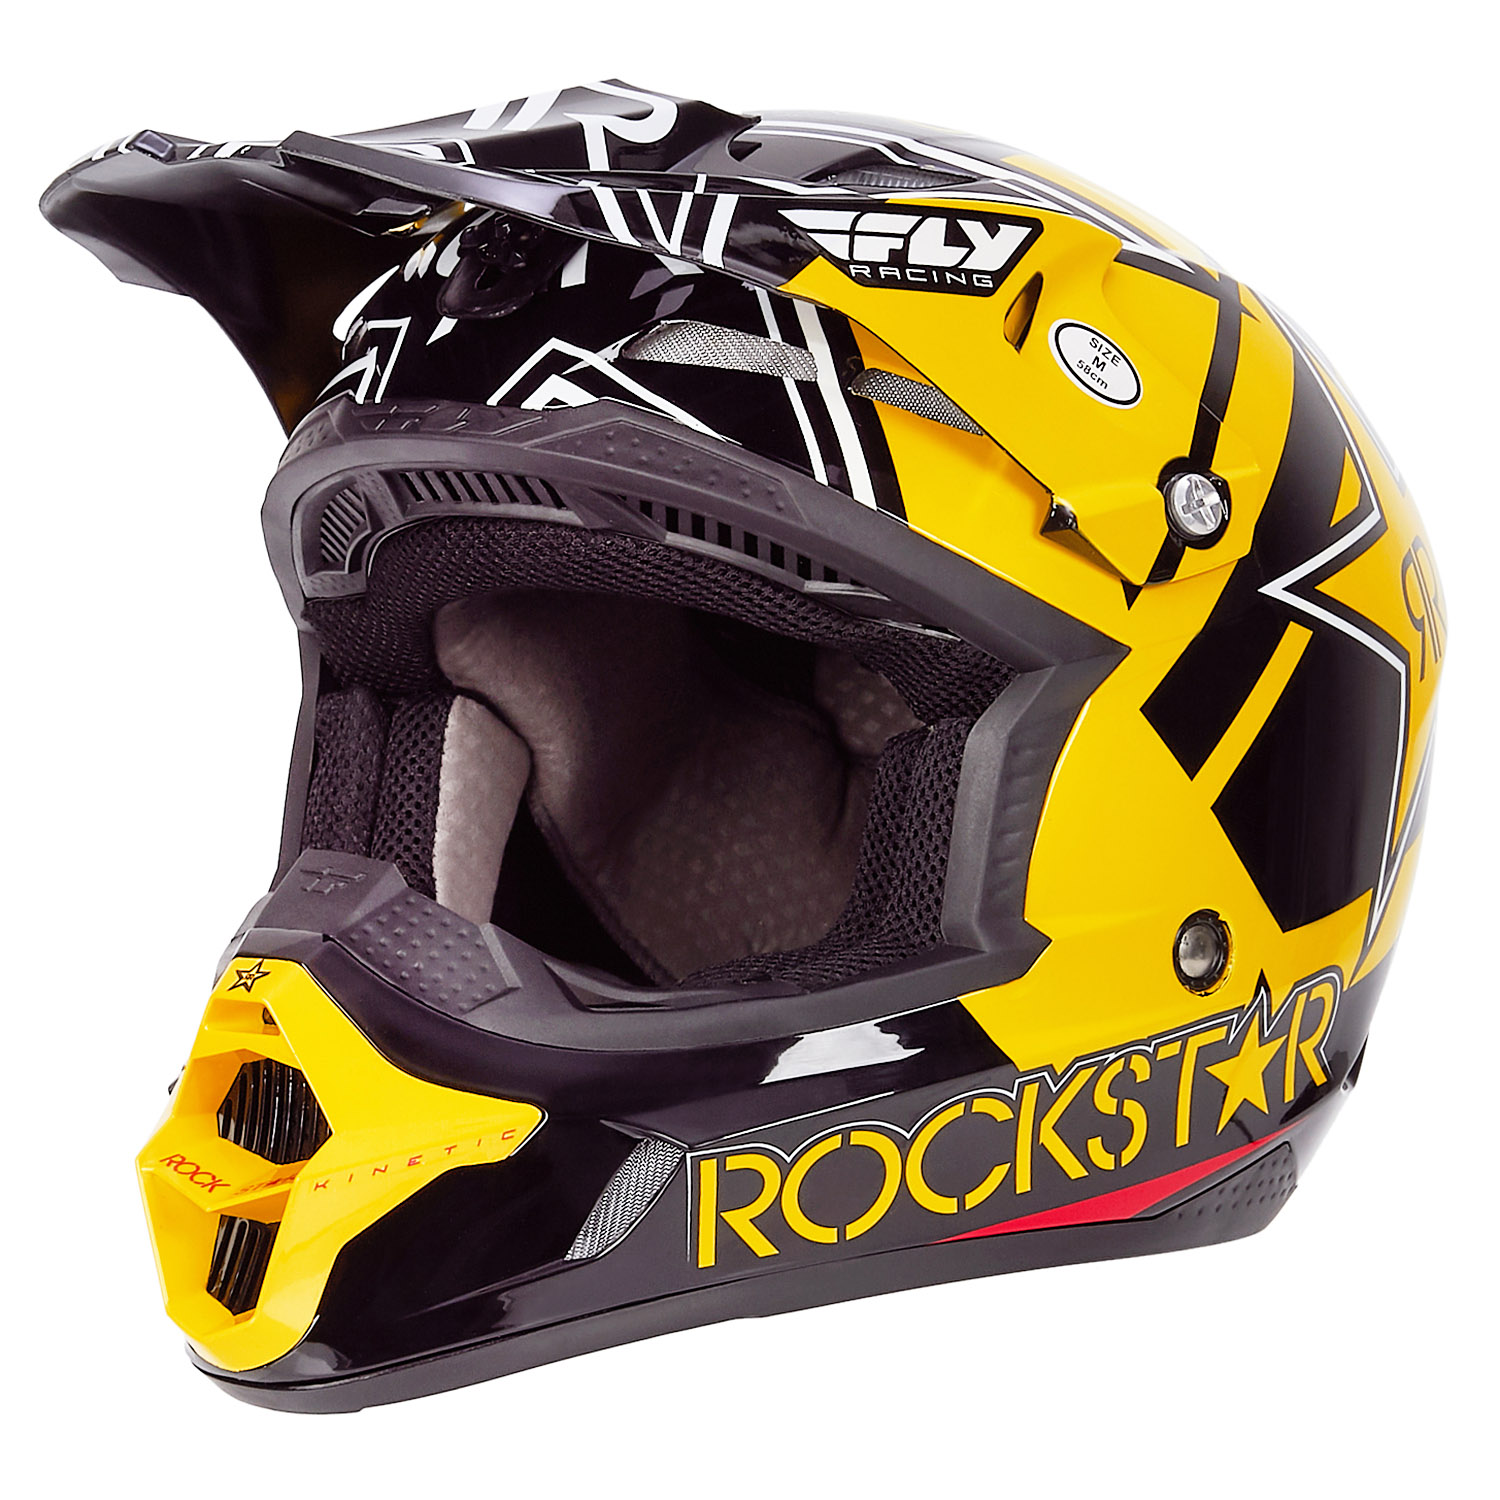 Fly Racing Helm Kinetic Pro Rockstar Schwarz/Gelb